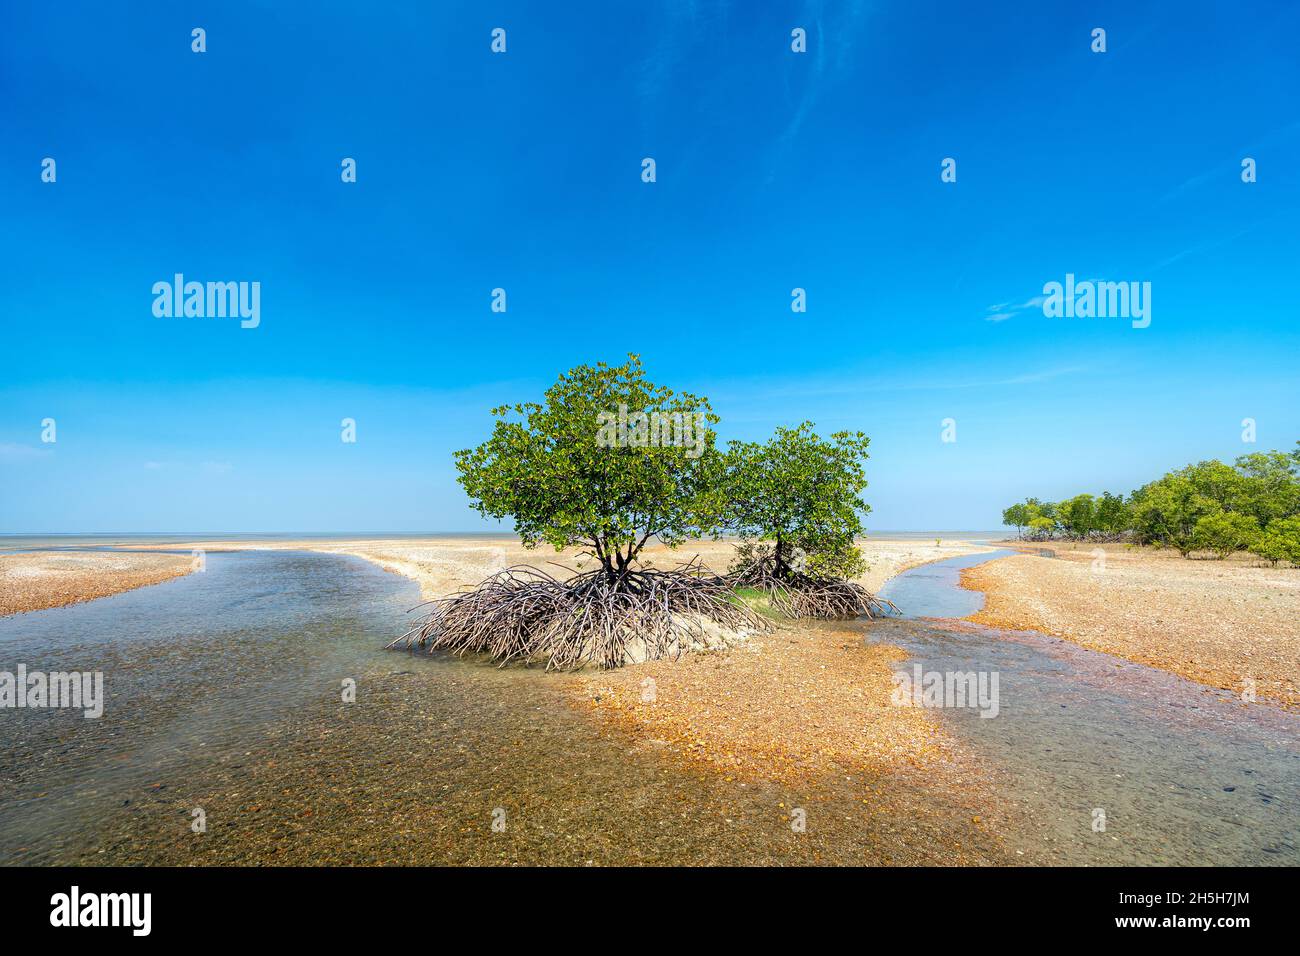 Red Mangroves (Rhizophora stylosa) growing on shelly beach, Cape York Peninsula, Queensland Australia Stock Photo